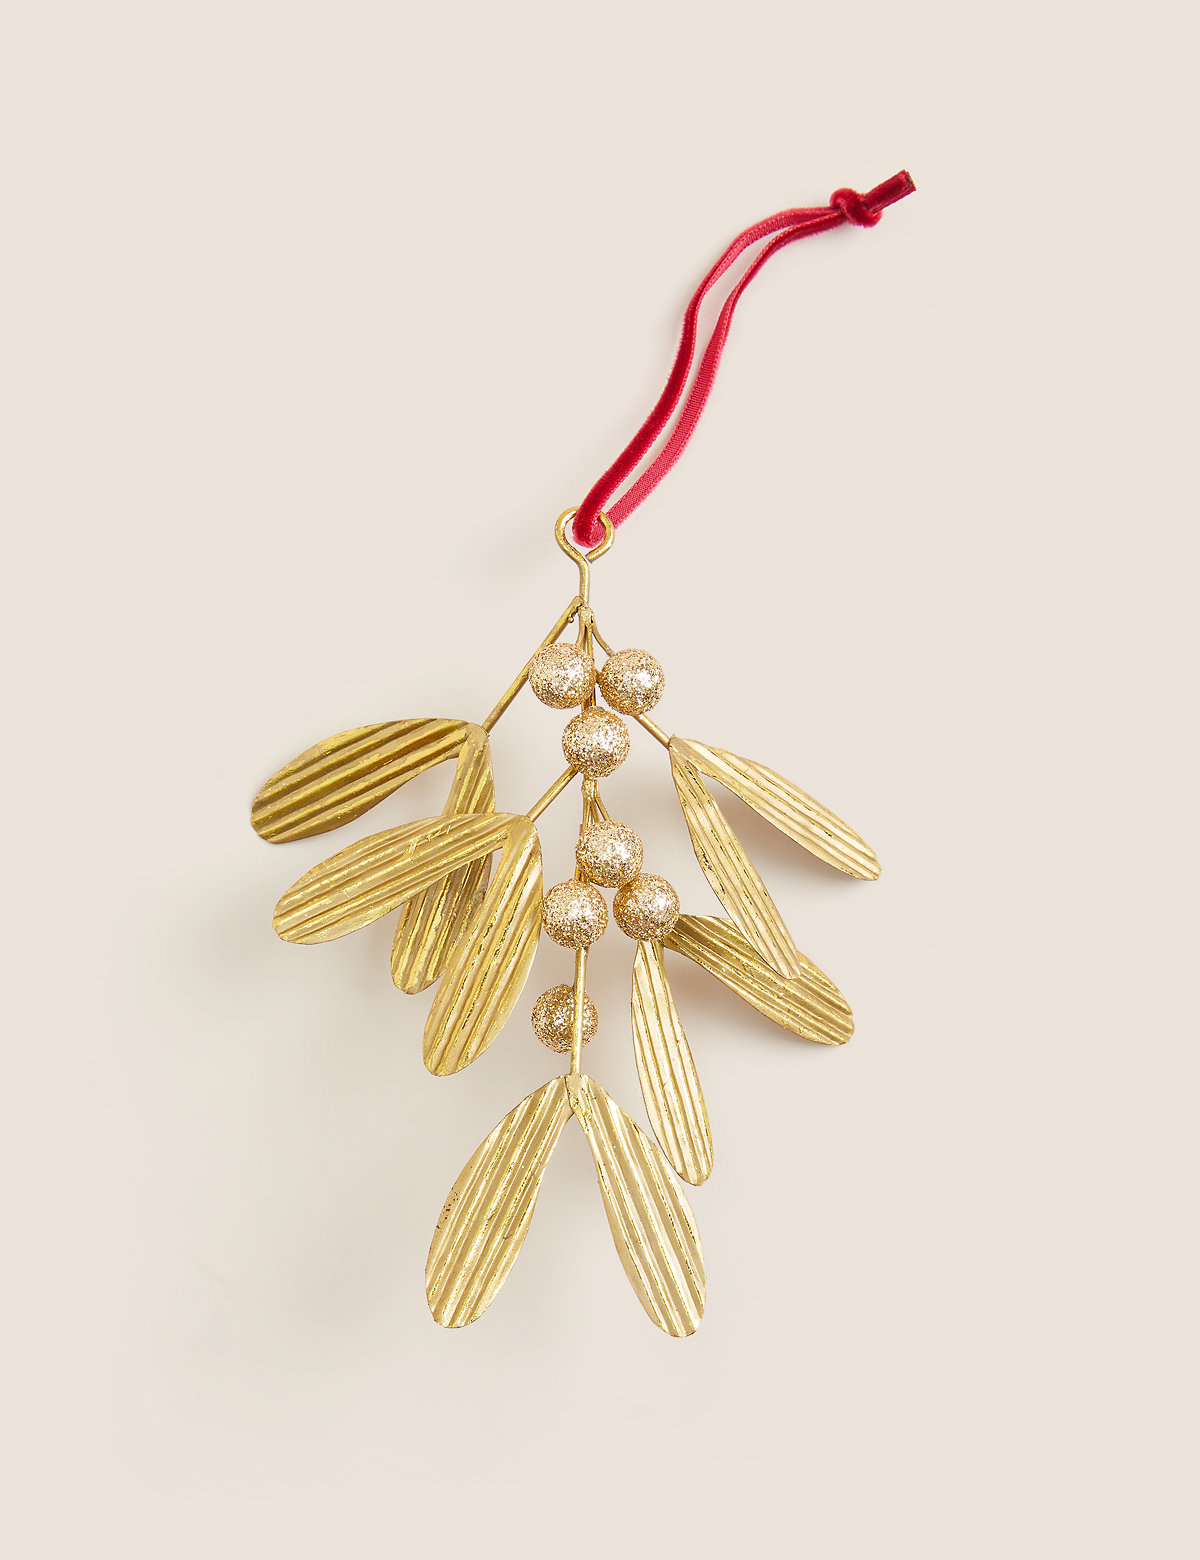 Gold Hanging Mistletoe Decoration